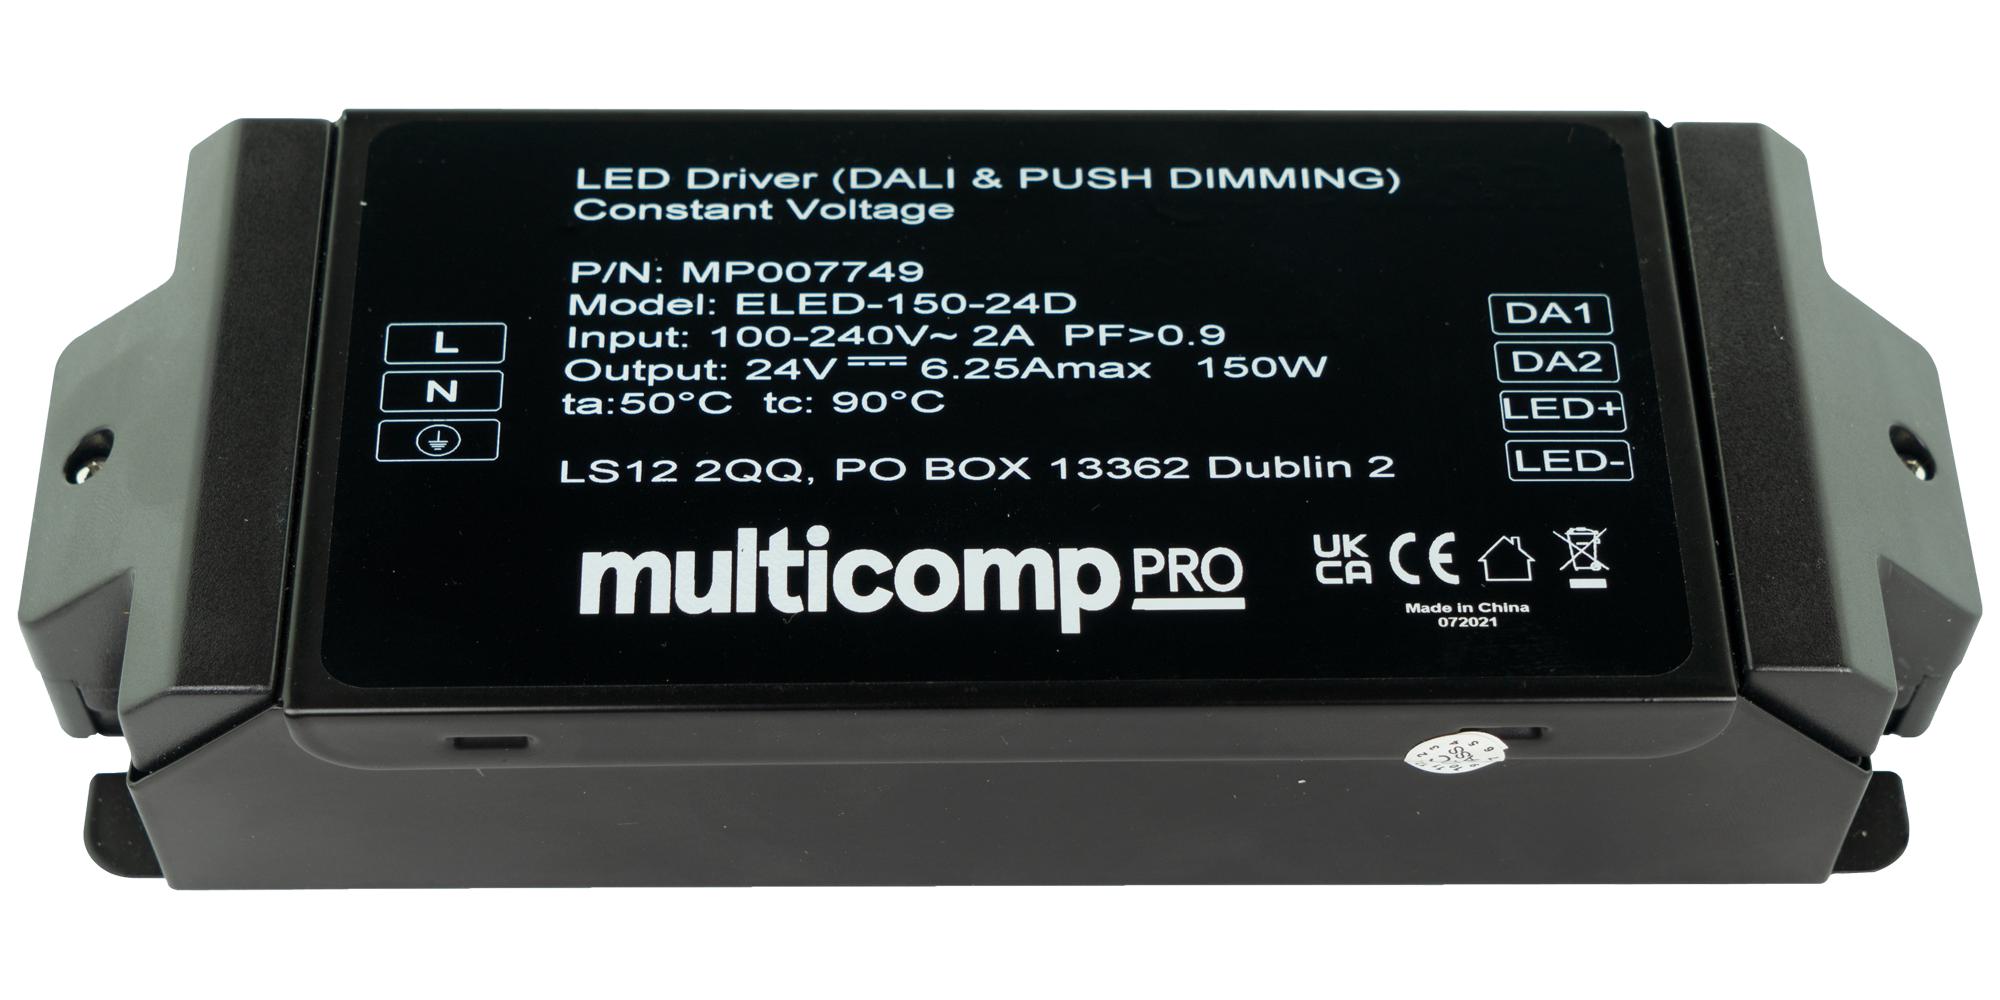 MP007749 LED DRIVER, CONSTANT VOLTAGE, 150W MULTICOMP PRO